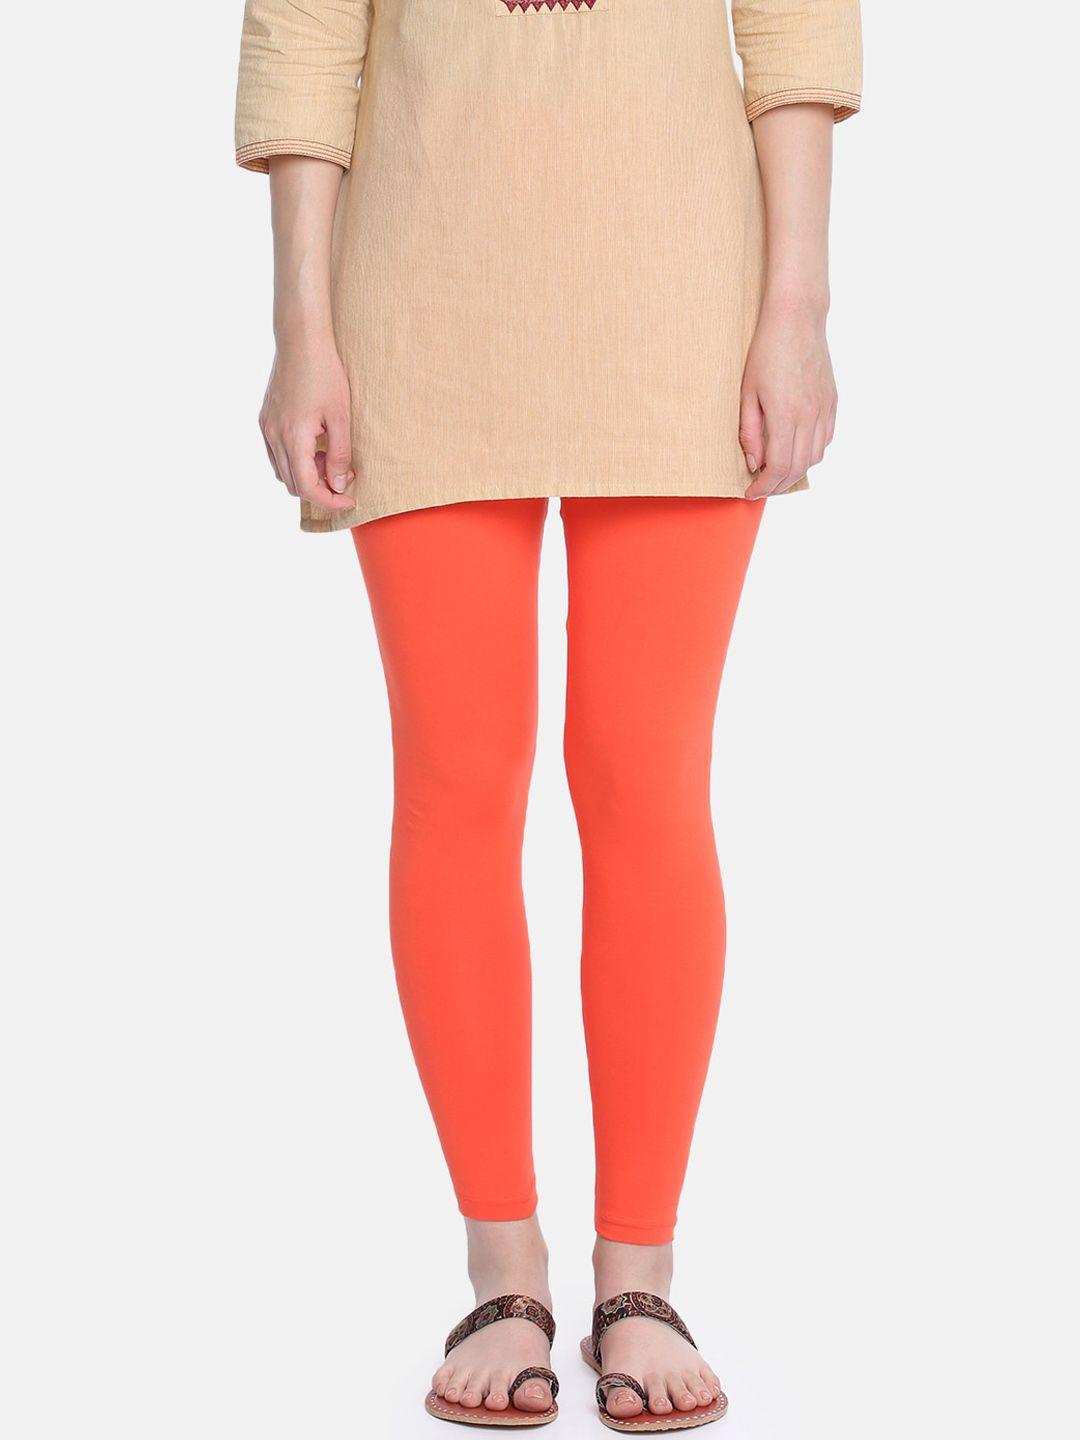 dollar missy women orange solid ankle-length leggings